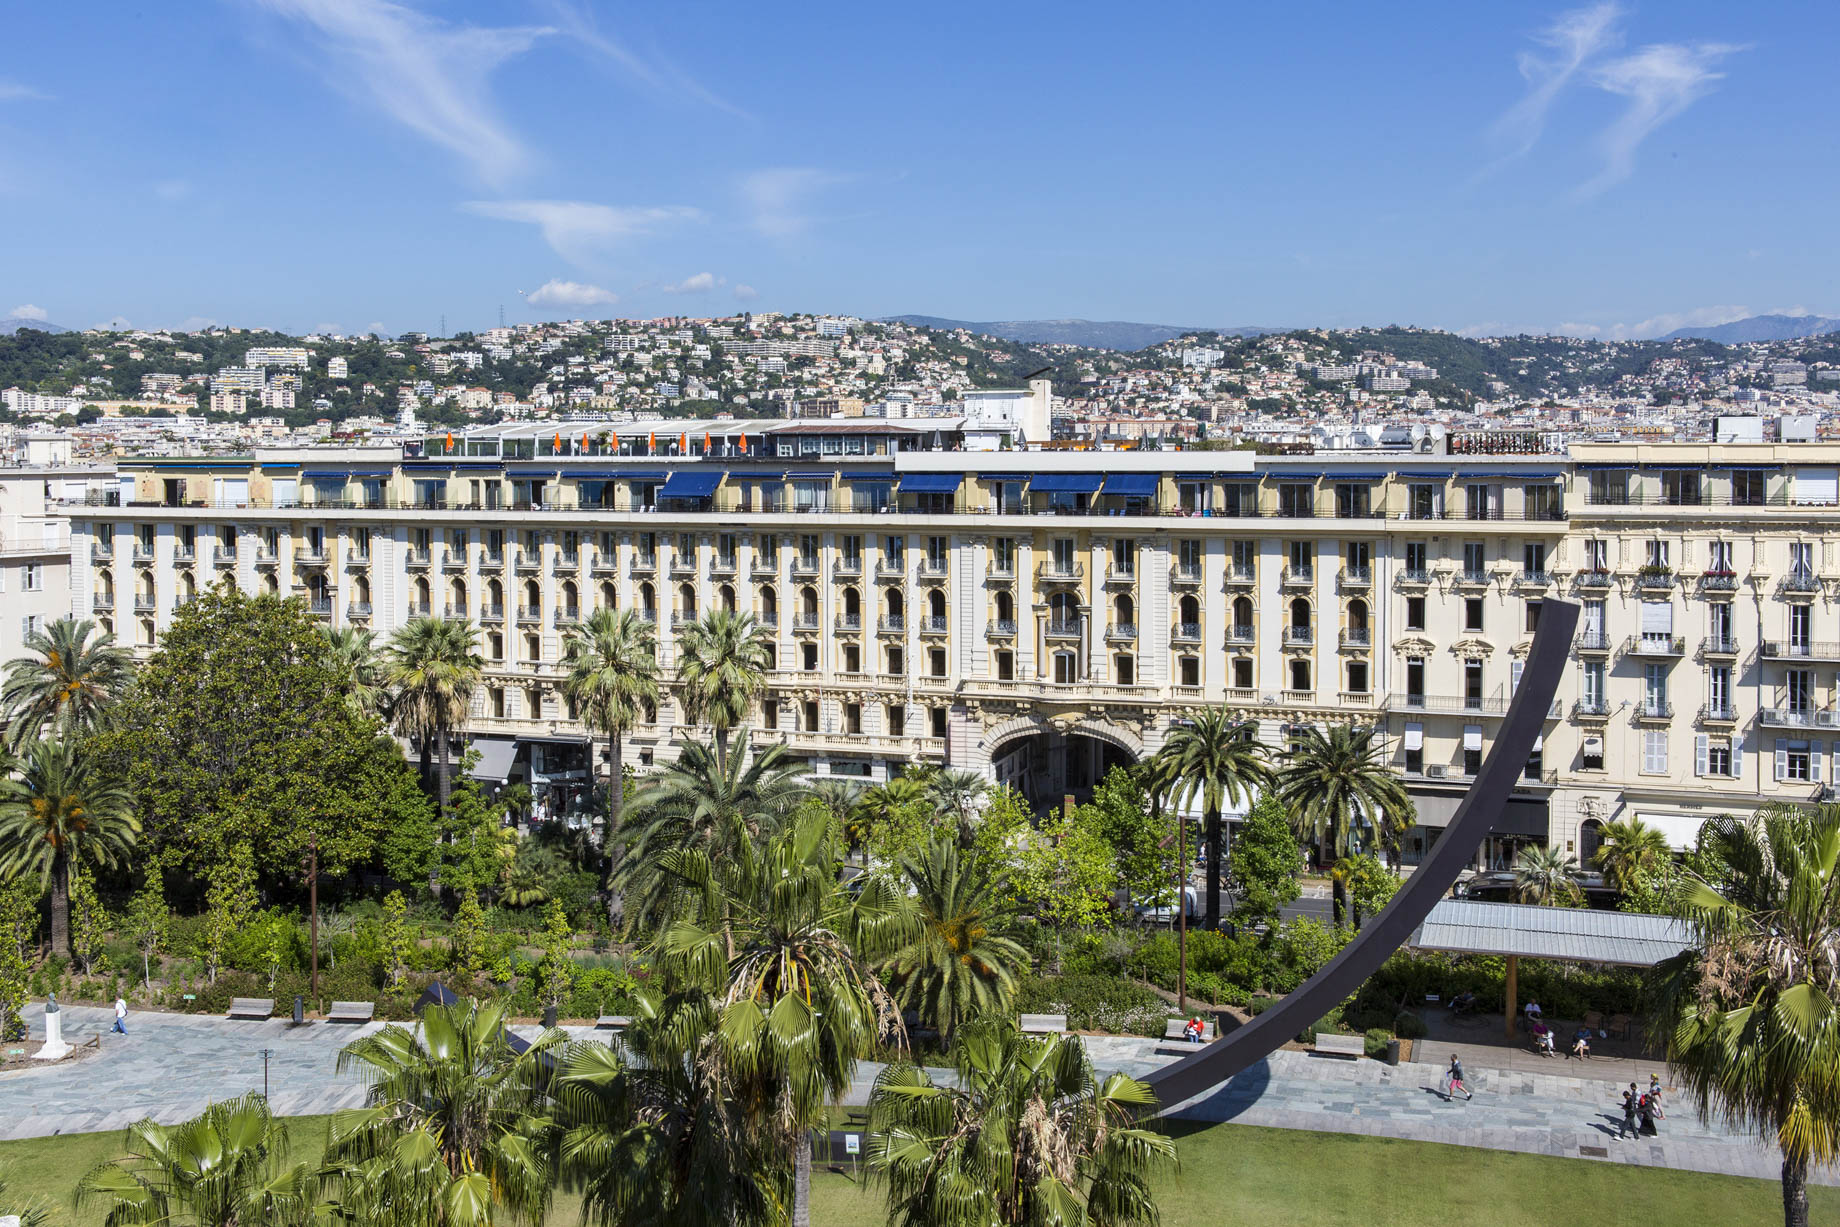 Anantara Plaza Nice Hotel – Nice, France – Exterior Rooftop View